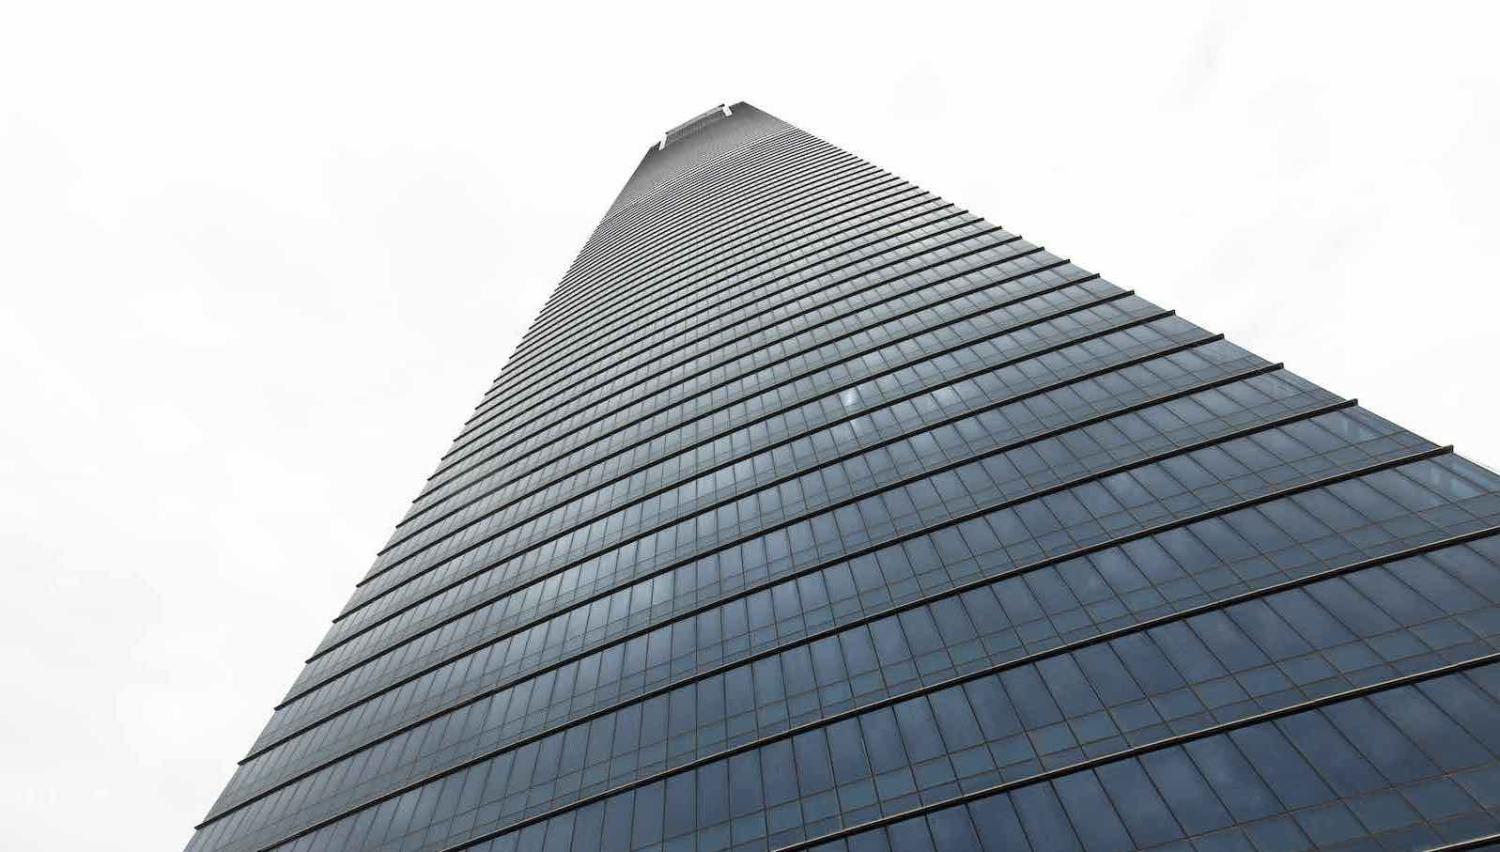 The Tun Razak Exchange Tower in Kuala Lumpur, Malaysia, one of the 1MDB projects (Ore Huiying/Getty Images)